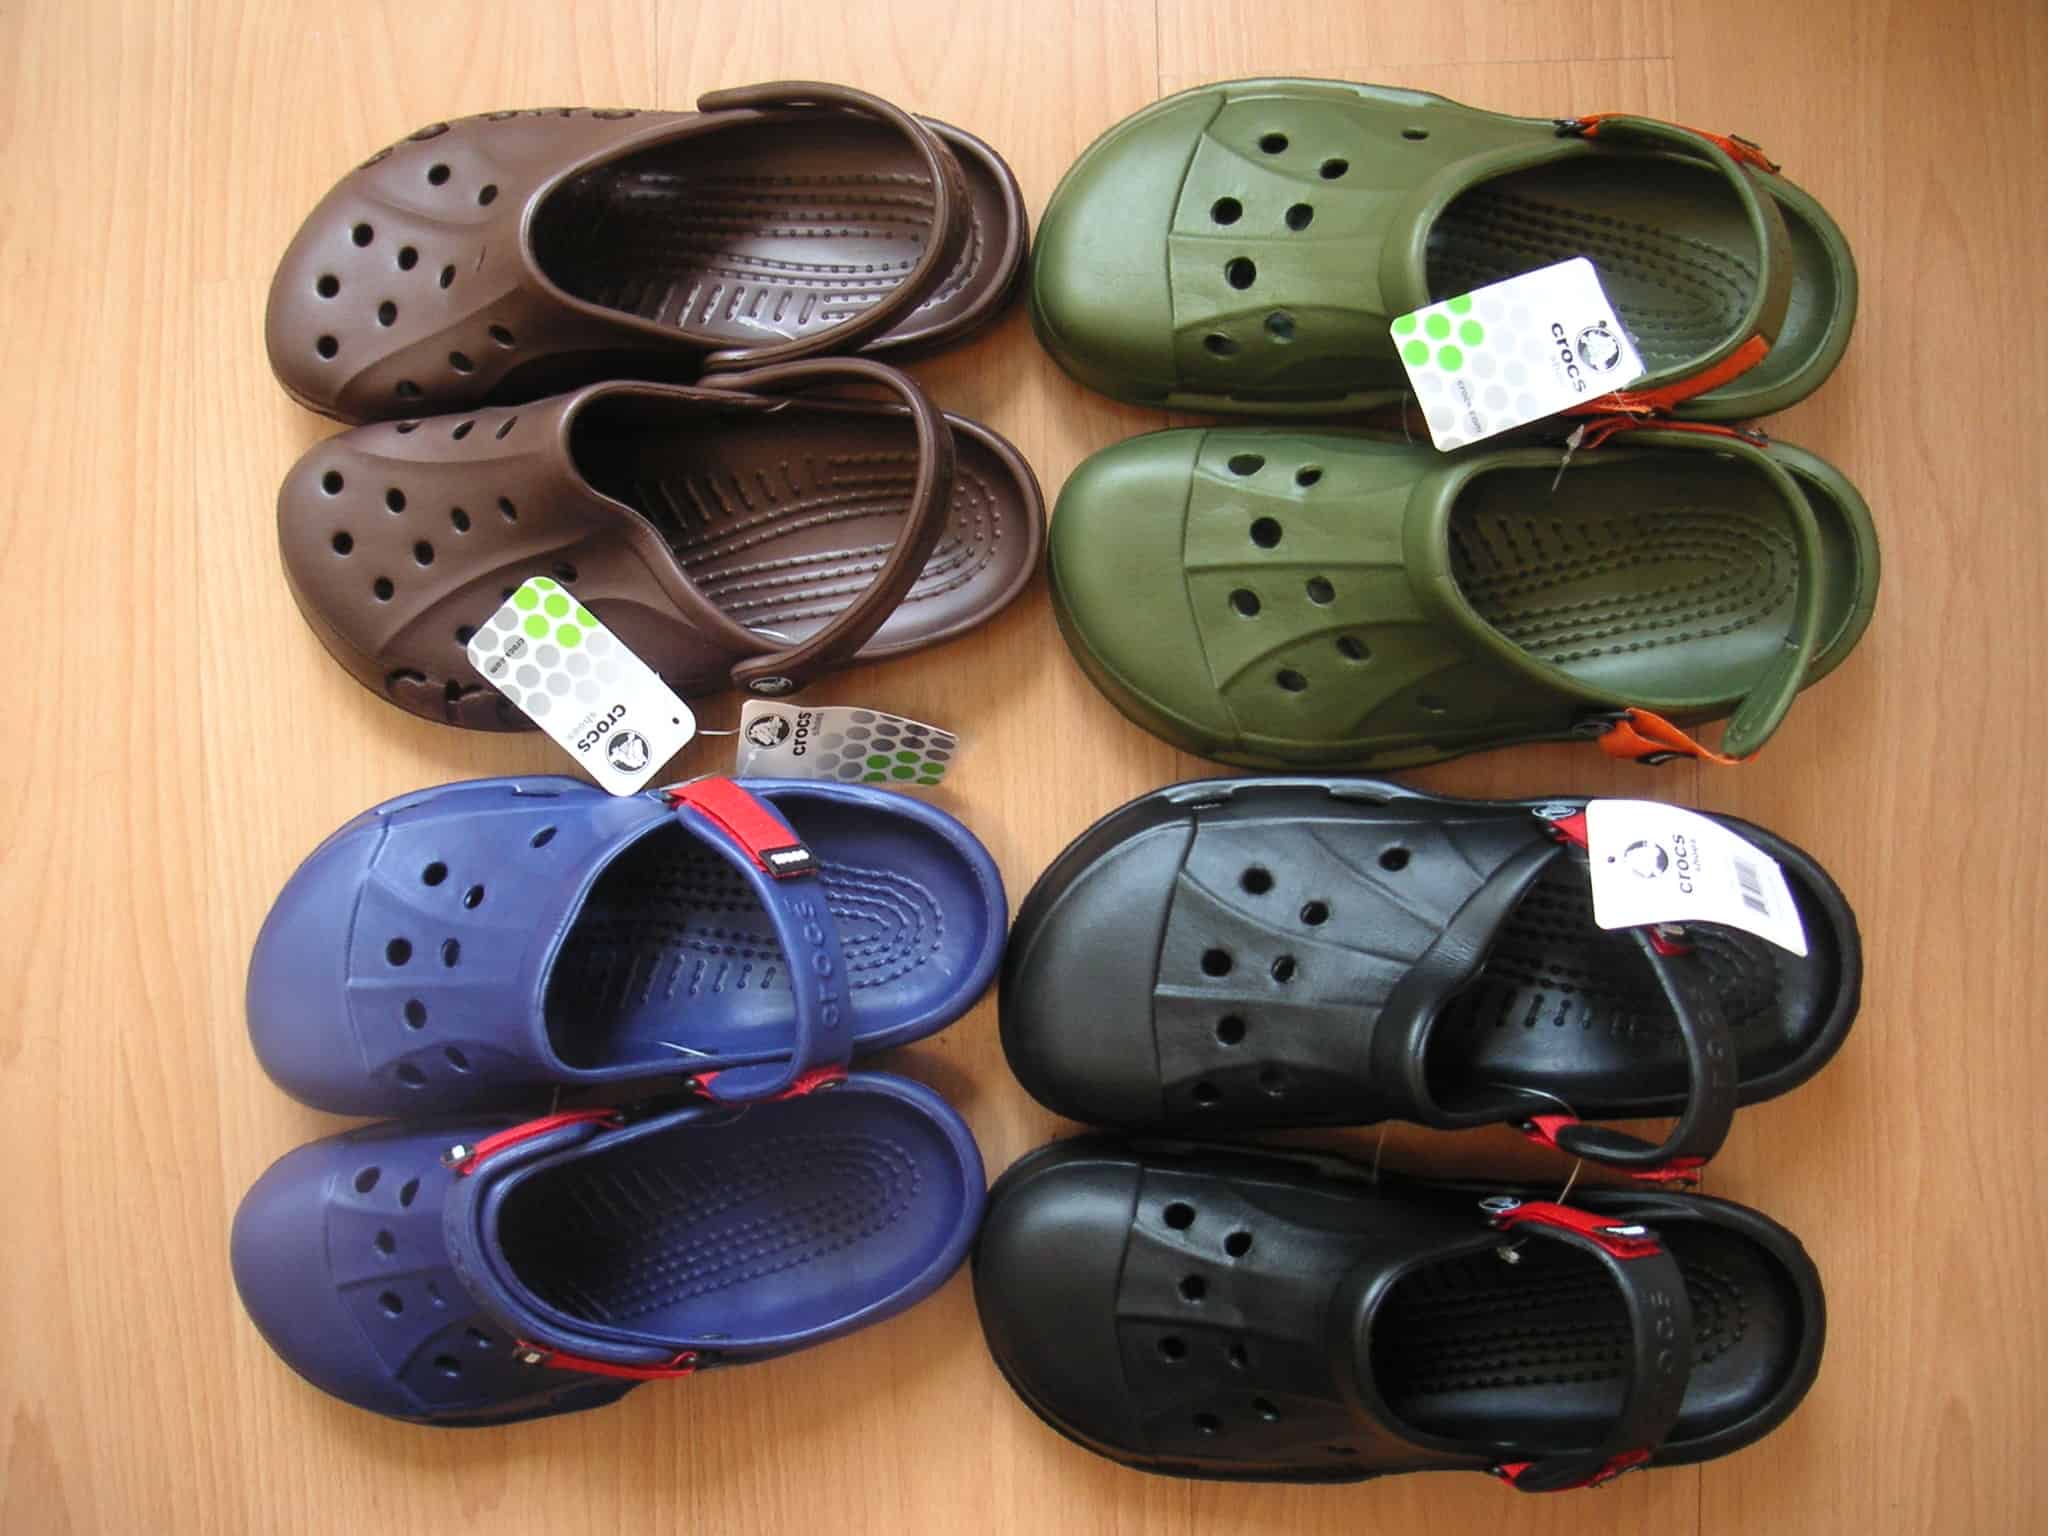 crocs hospital shoes